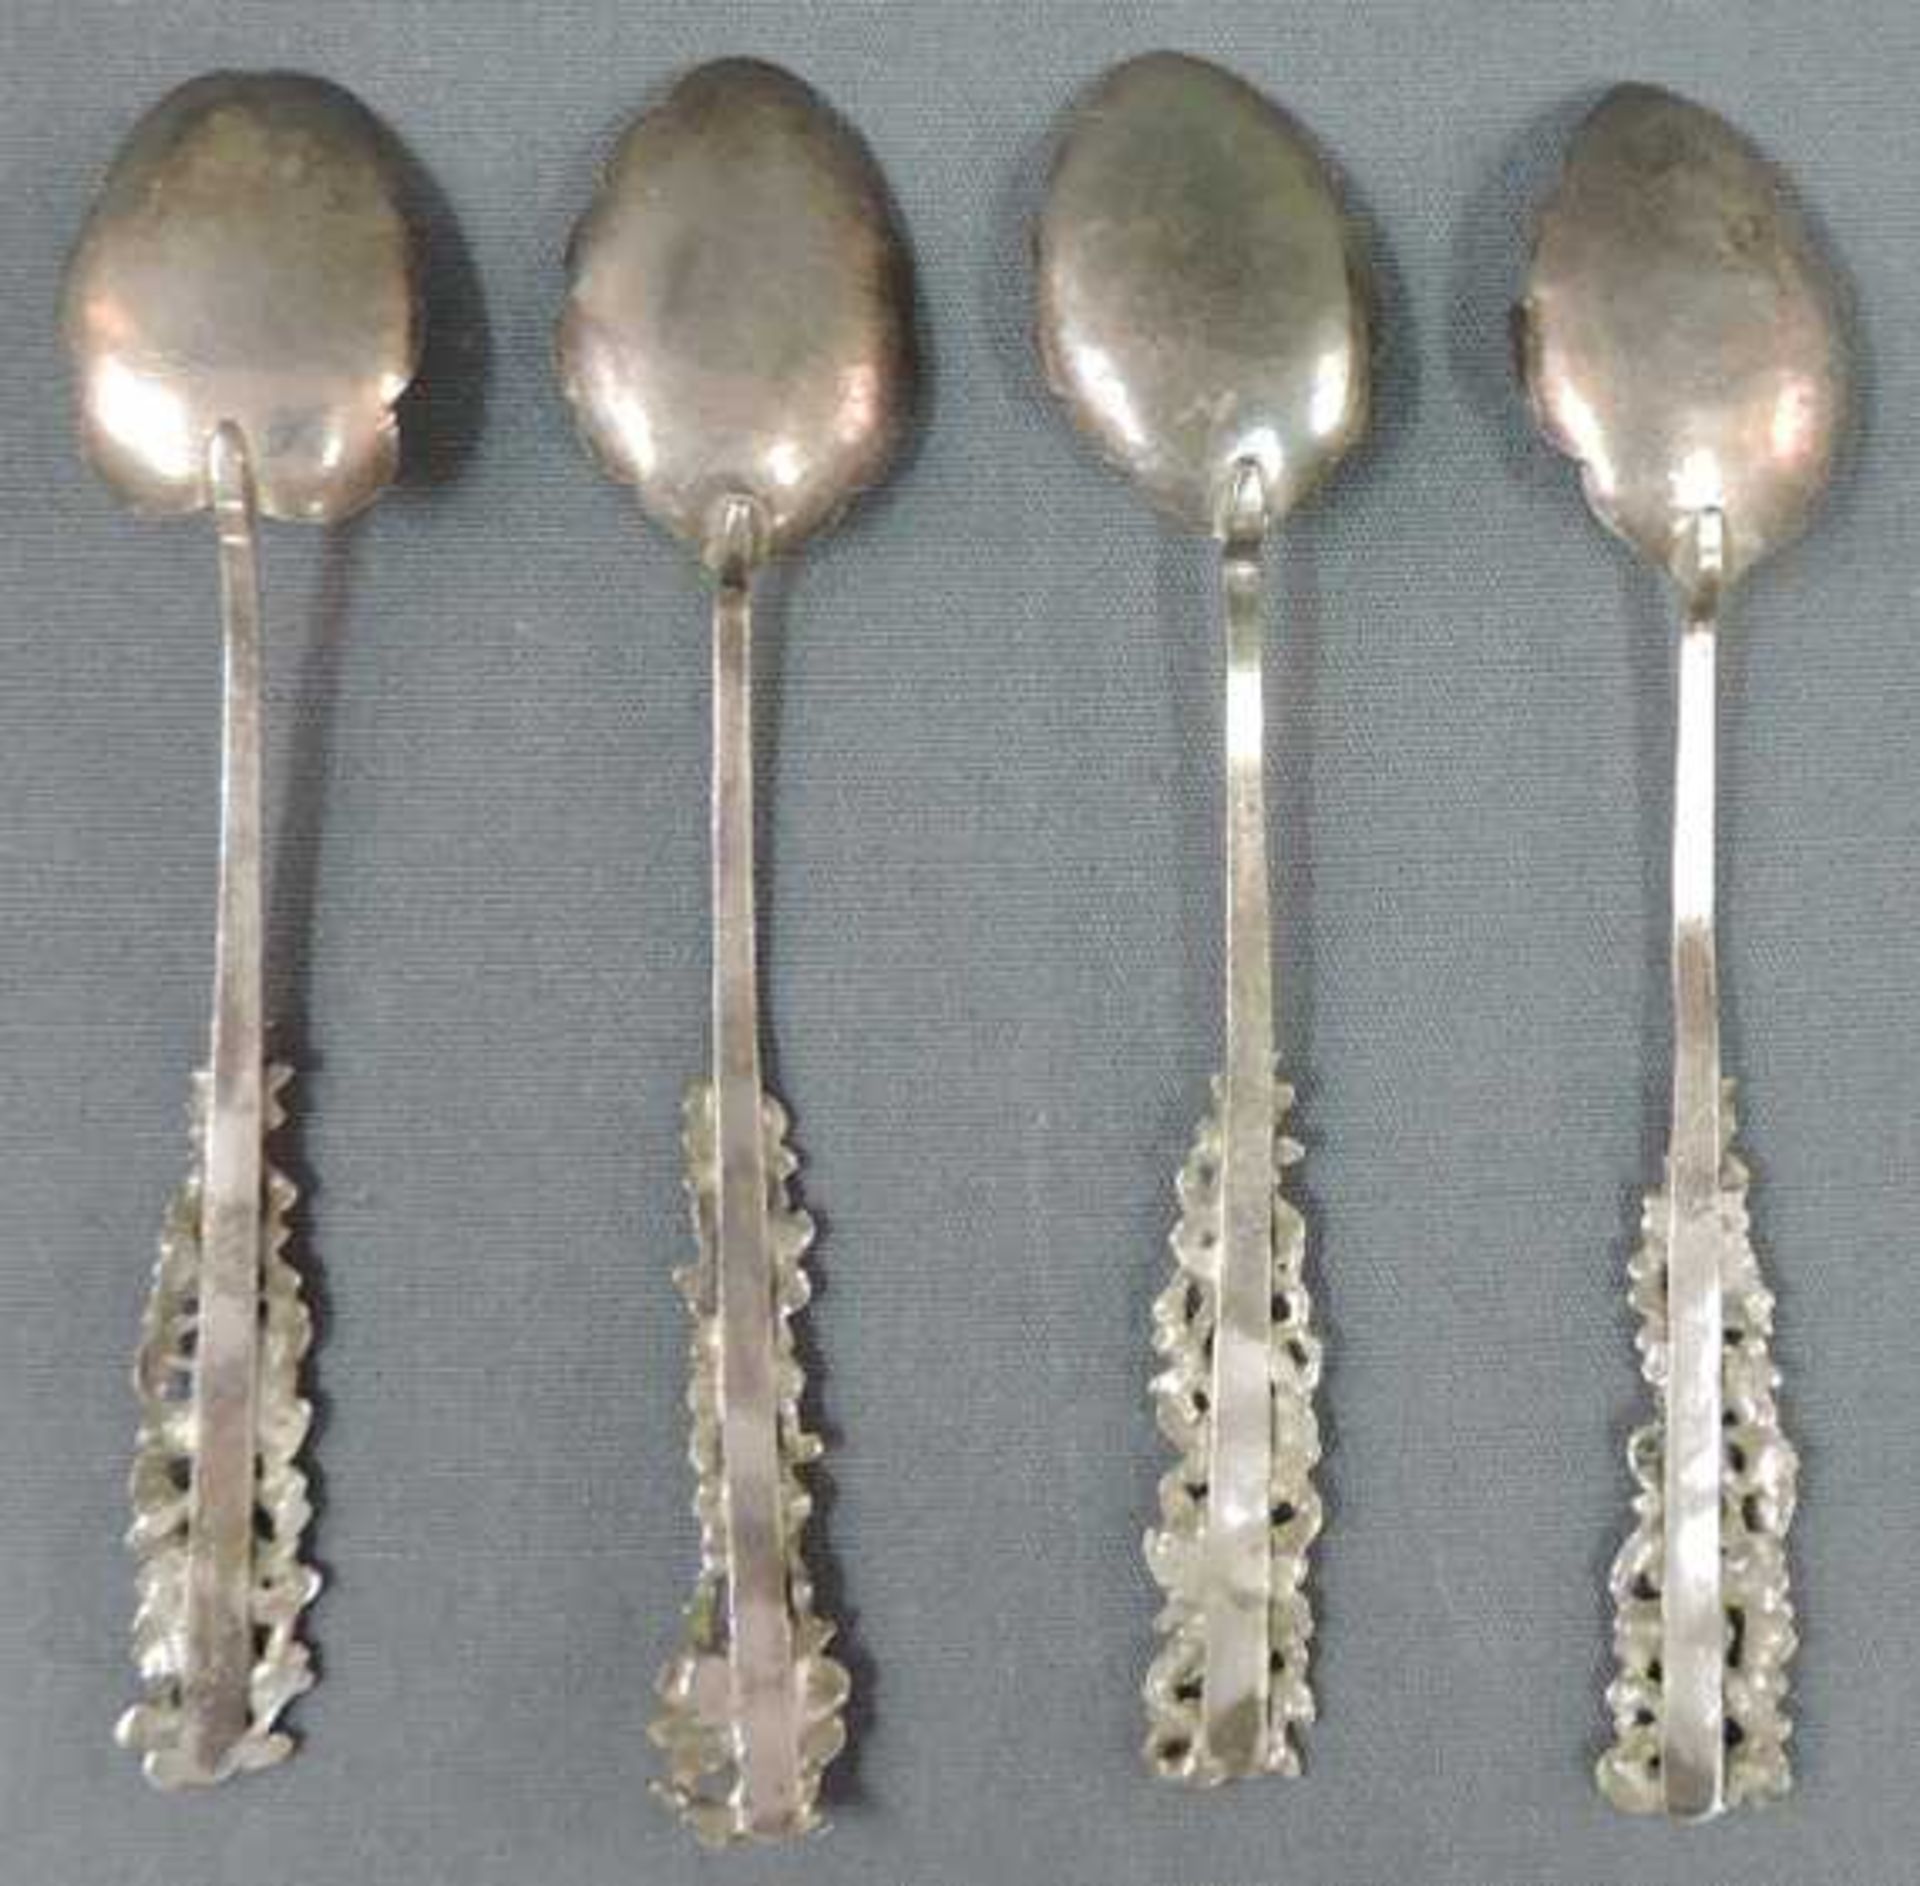 4 Silberlöffel, China, Jugendstil. Je 13 cm lang. 4 silver spoons. China. Art Nouveau. 13 cm long. - Bild 2 aus 3